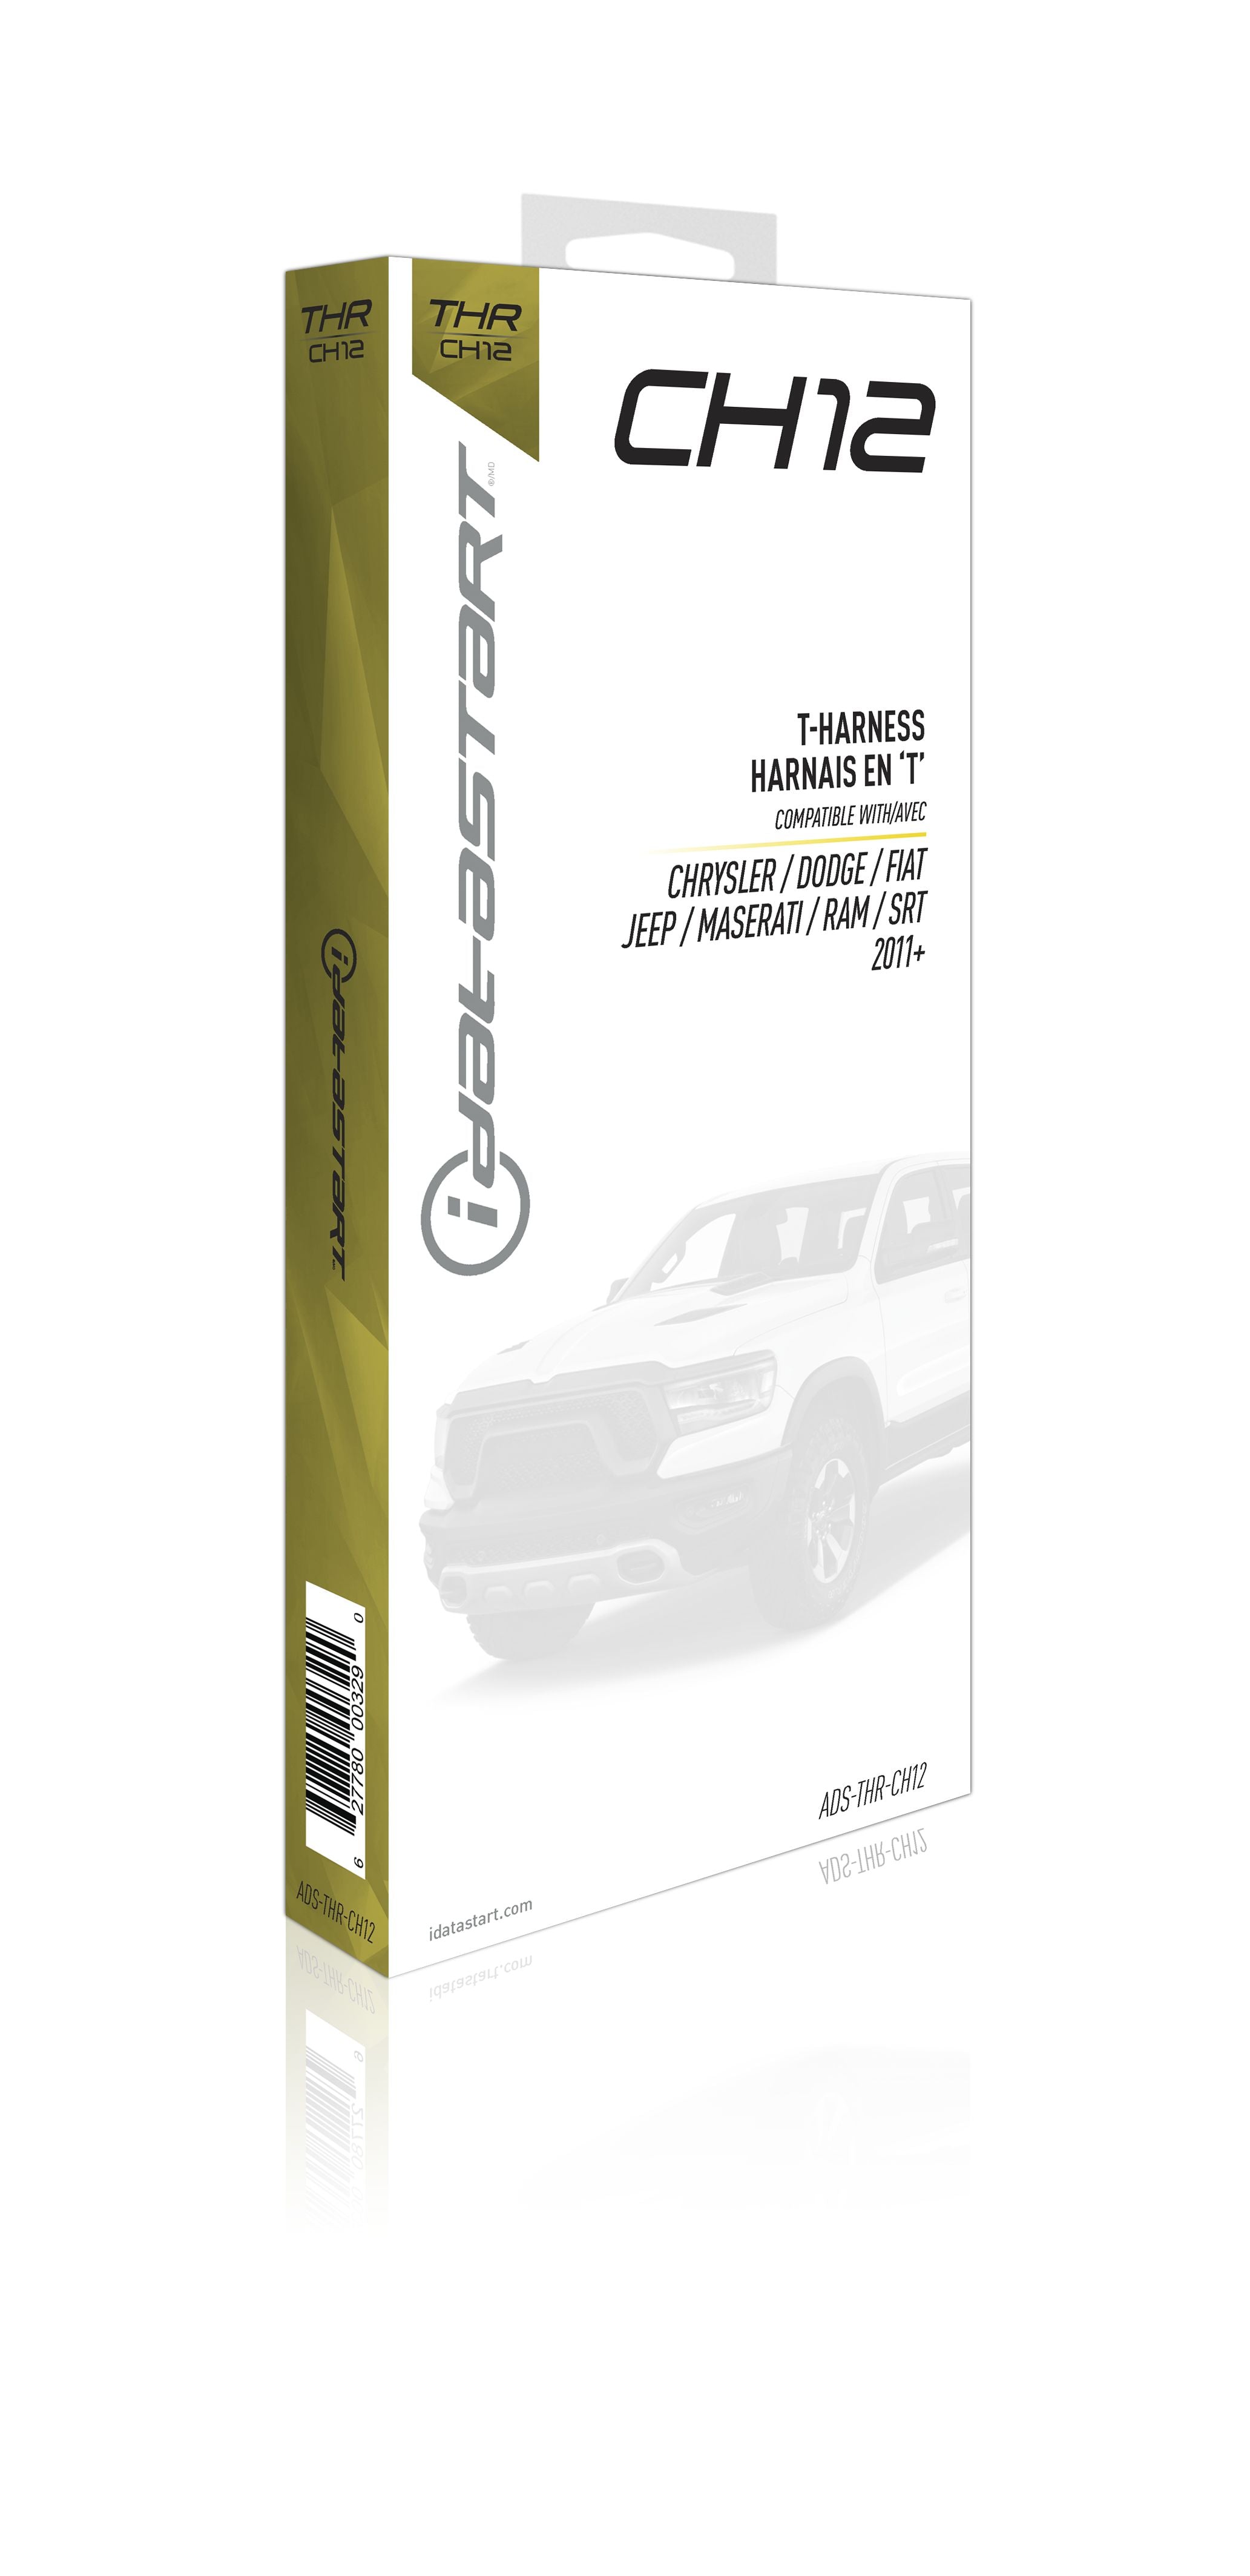 iDatastart ADS-THR-CH12 - T-Harness For Chrysler/Dodge/ Jeep Models 11-20